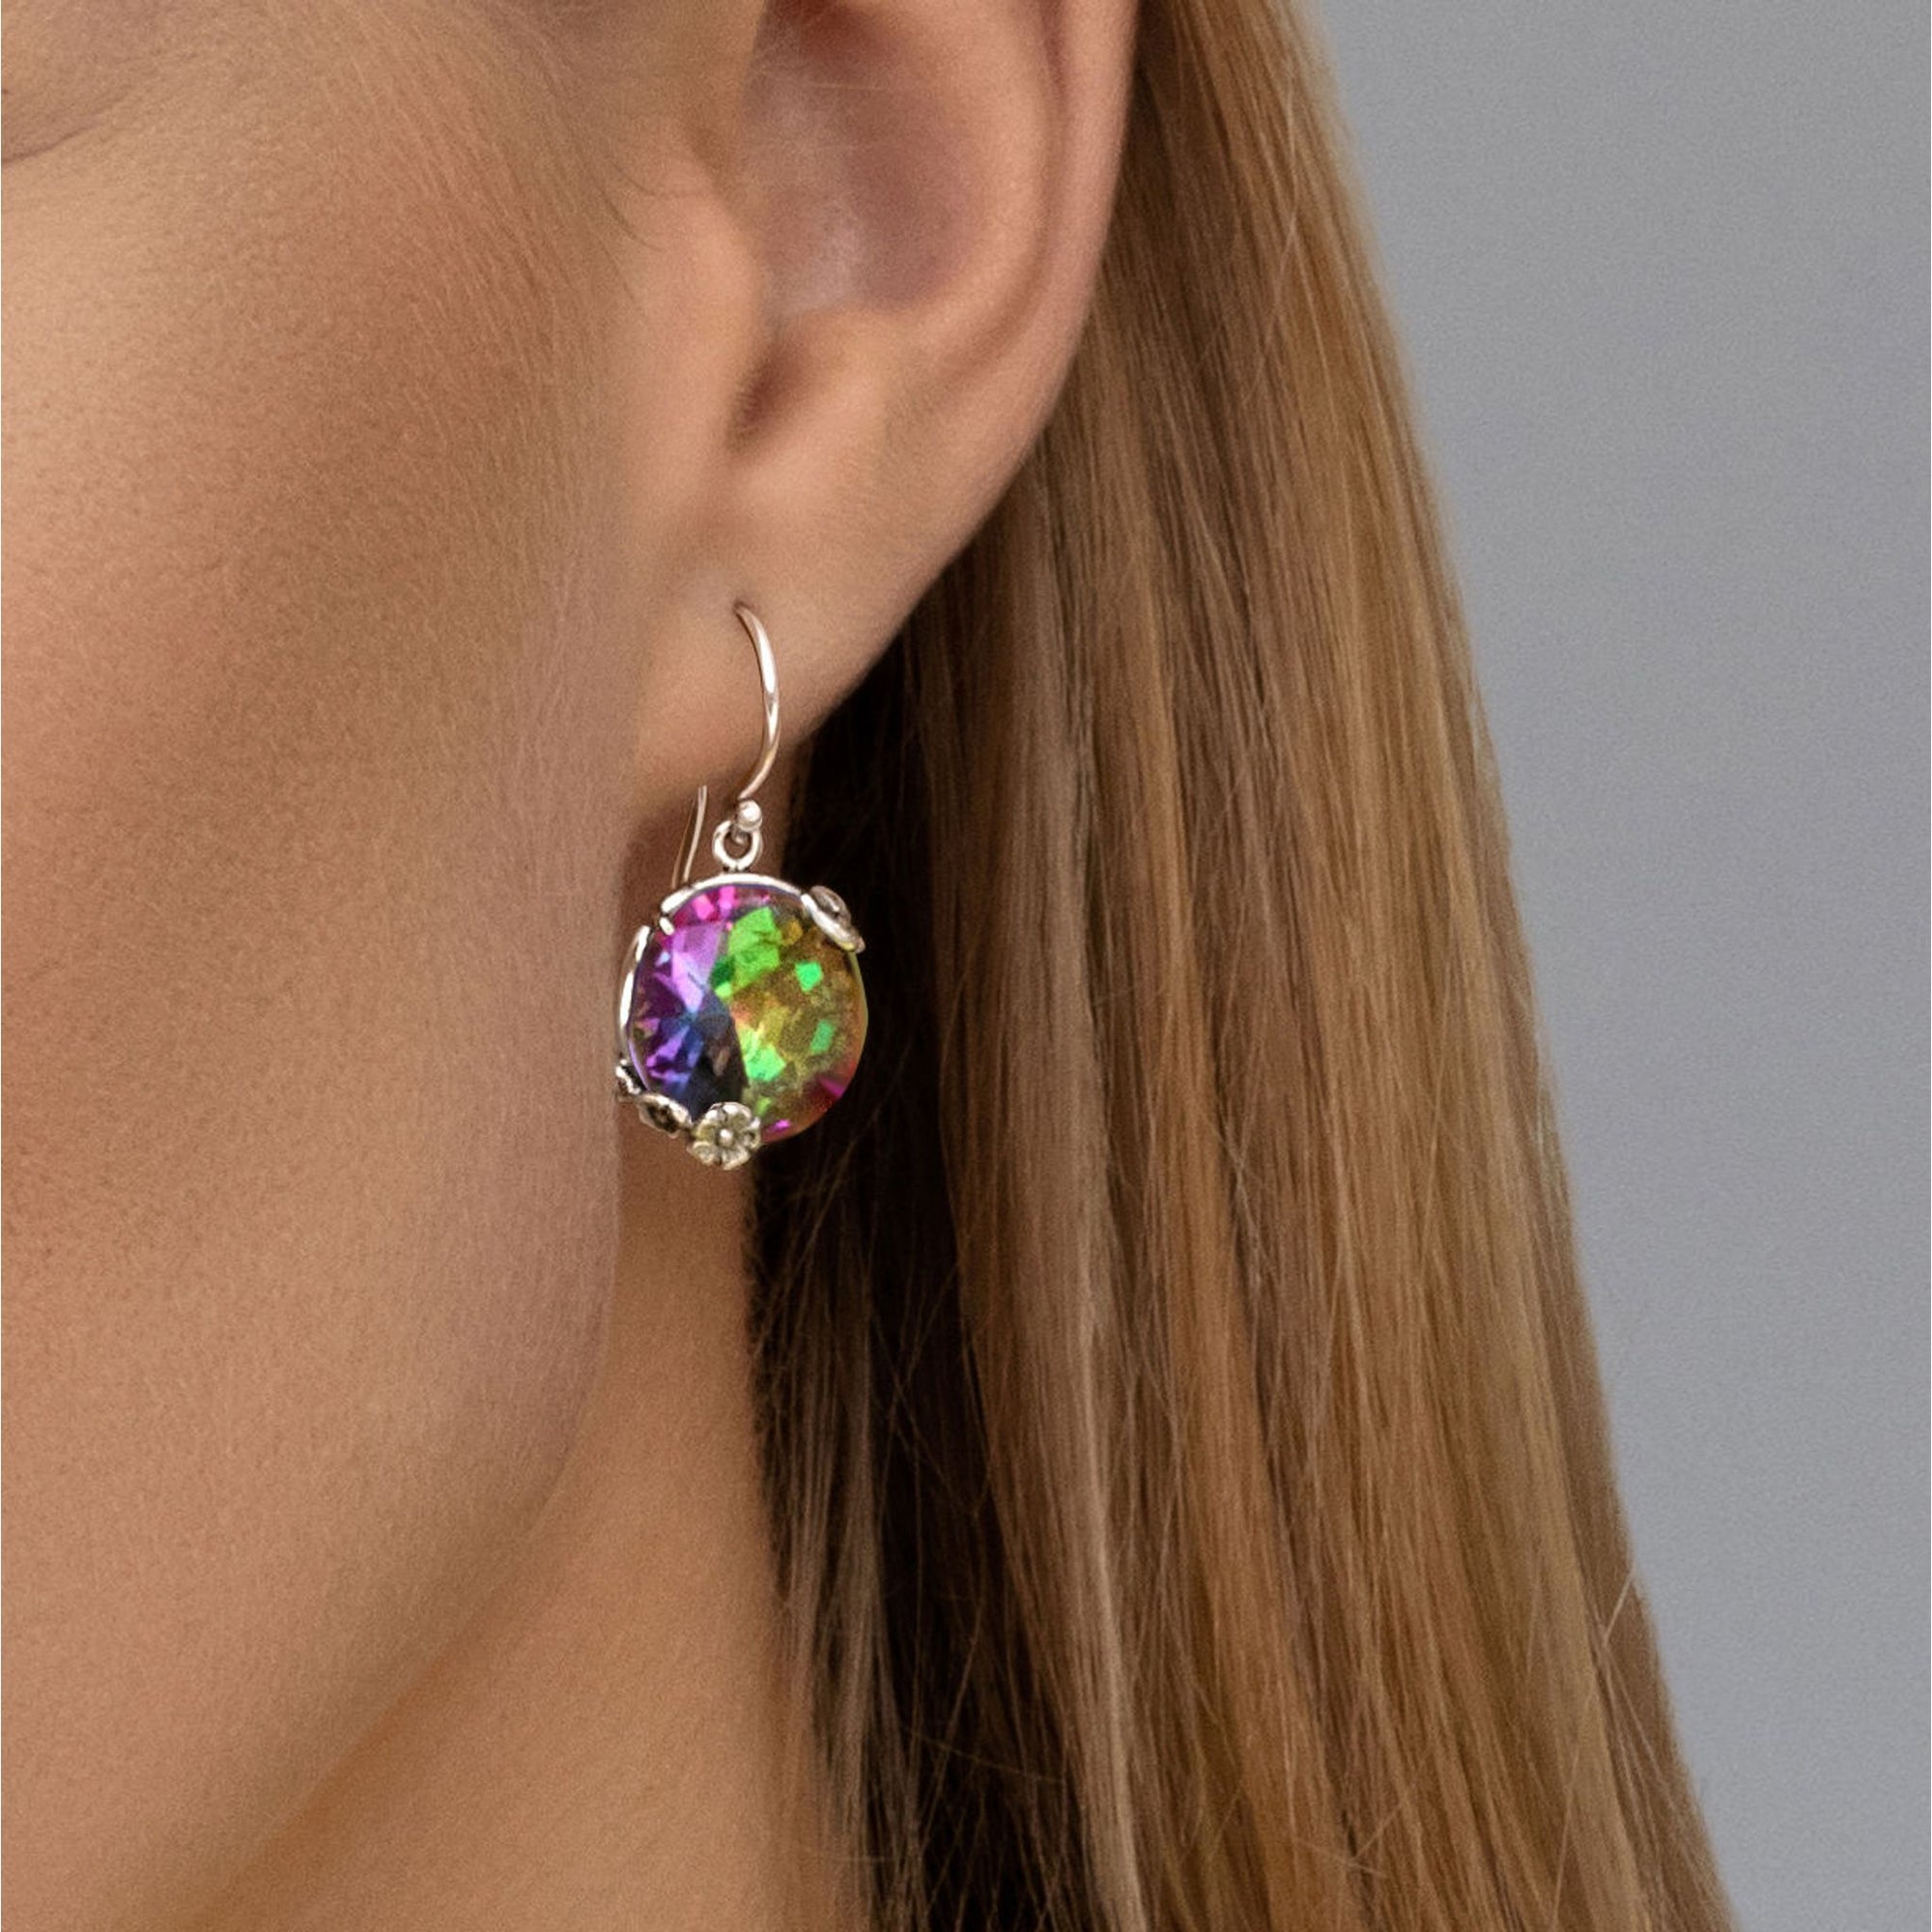 Sterling Silver Floral Earrings